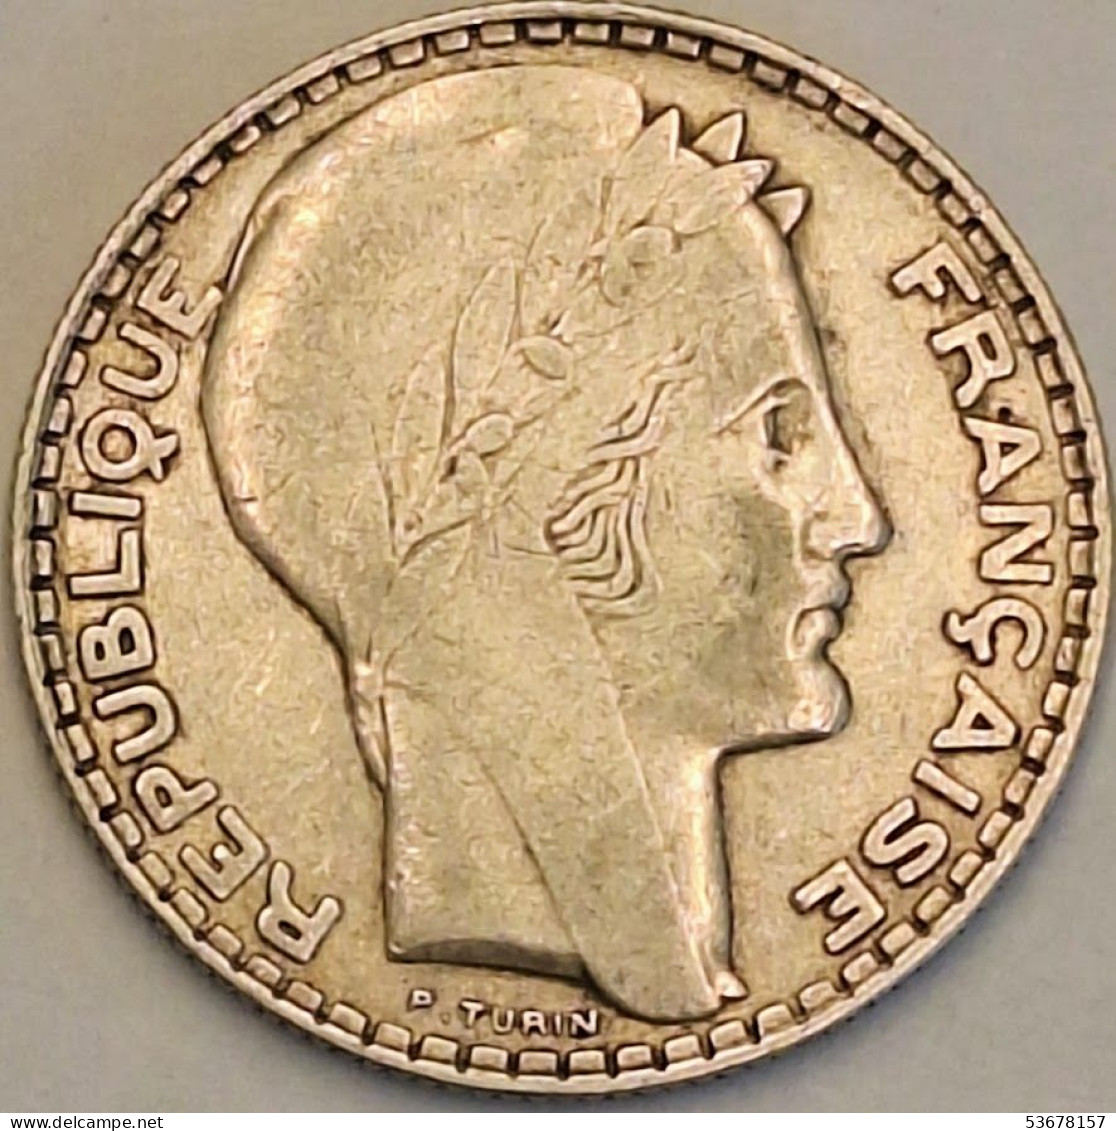 France - 10 Francs 1930, KM# 878, Silver (#4131) - 10 Francs